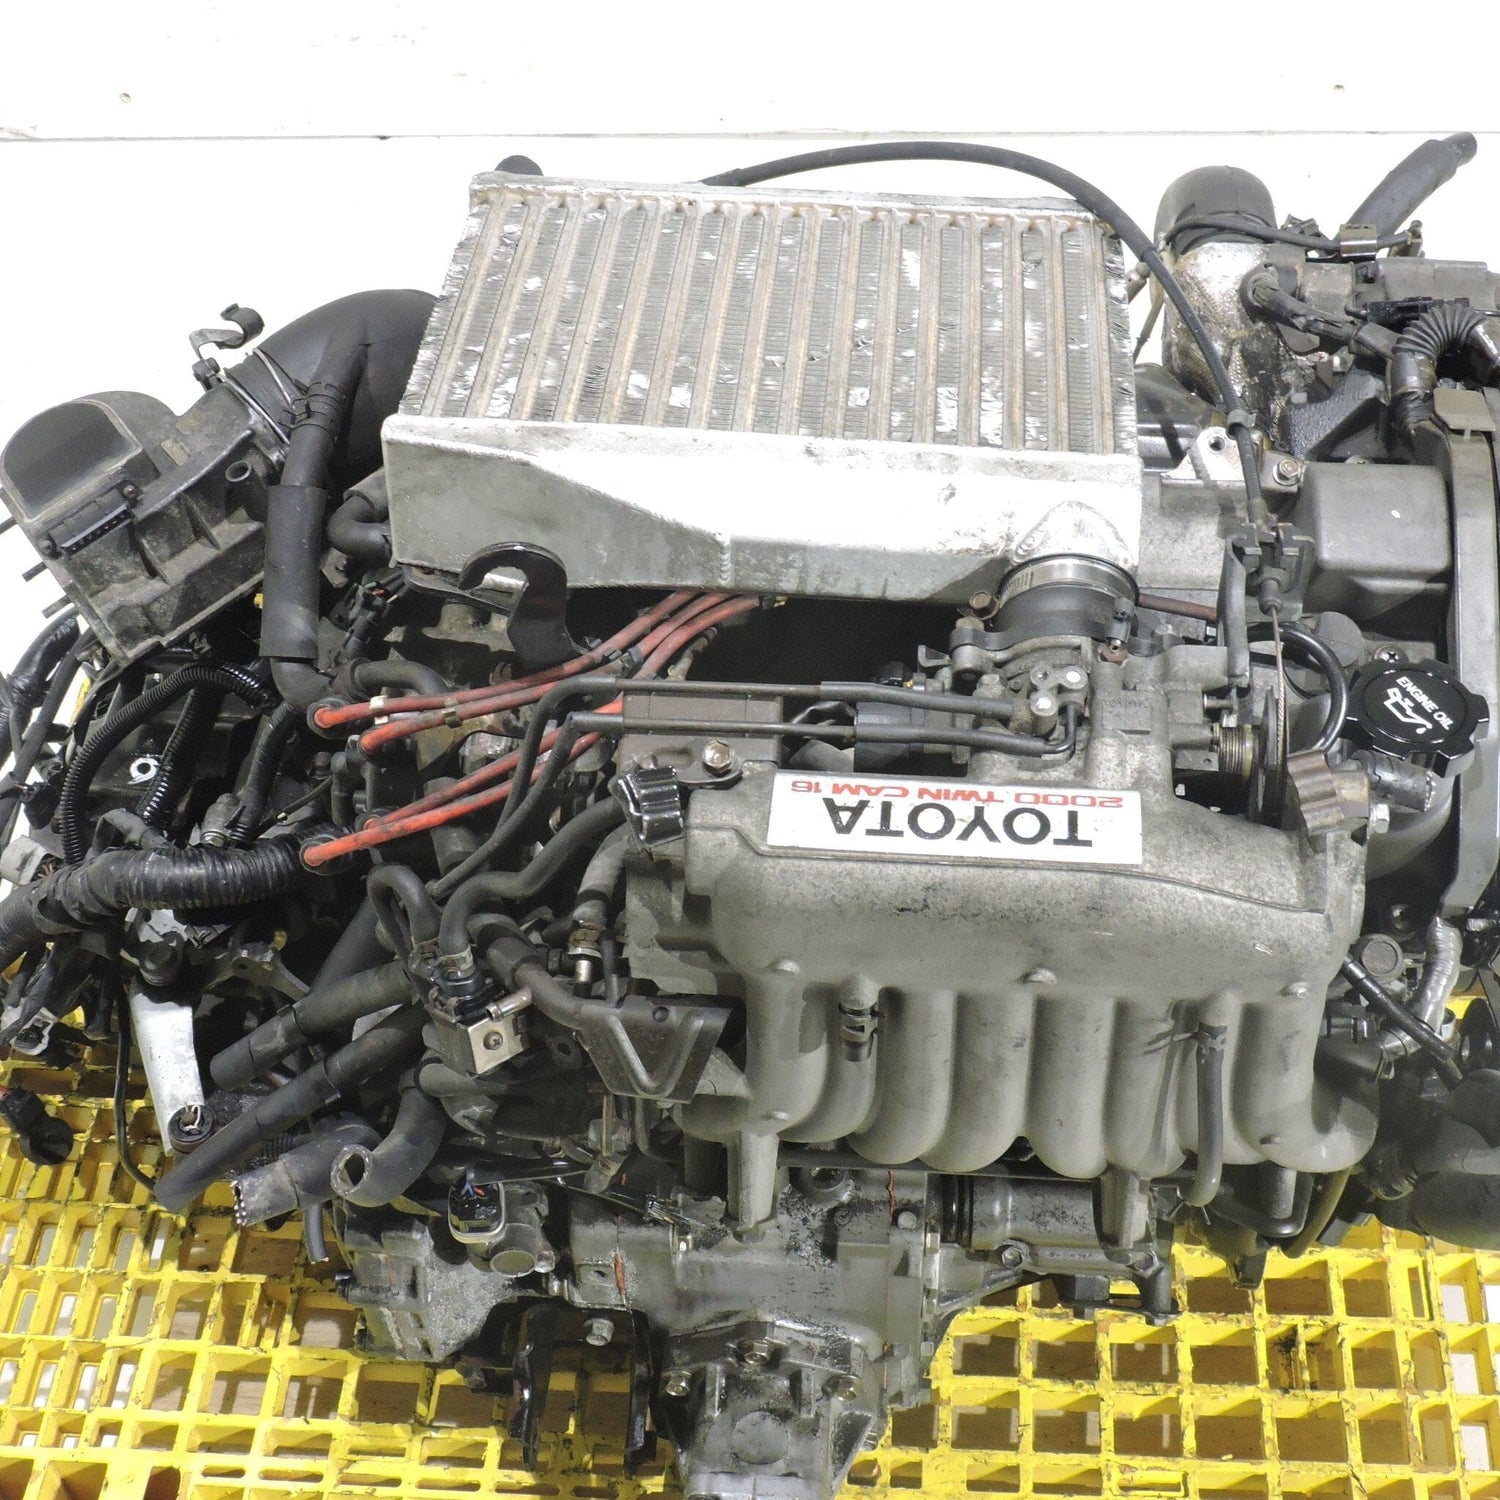 Toyota Celica 1989-1993 2.0l Awd Jdm Manual Engine Transmission 3s-Gte St185